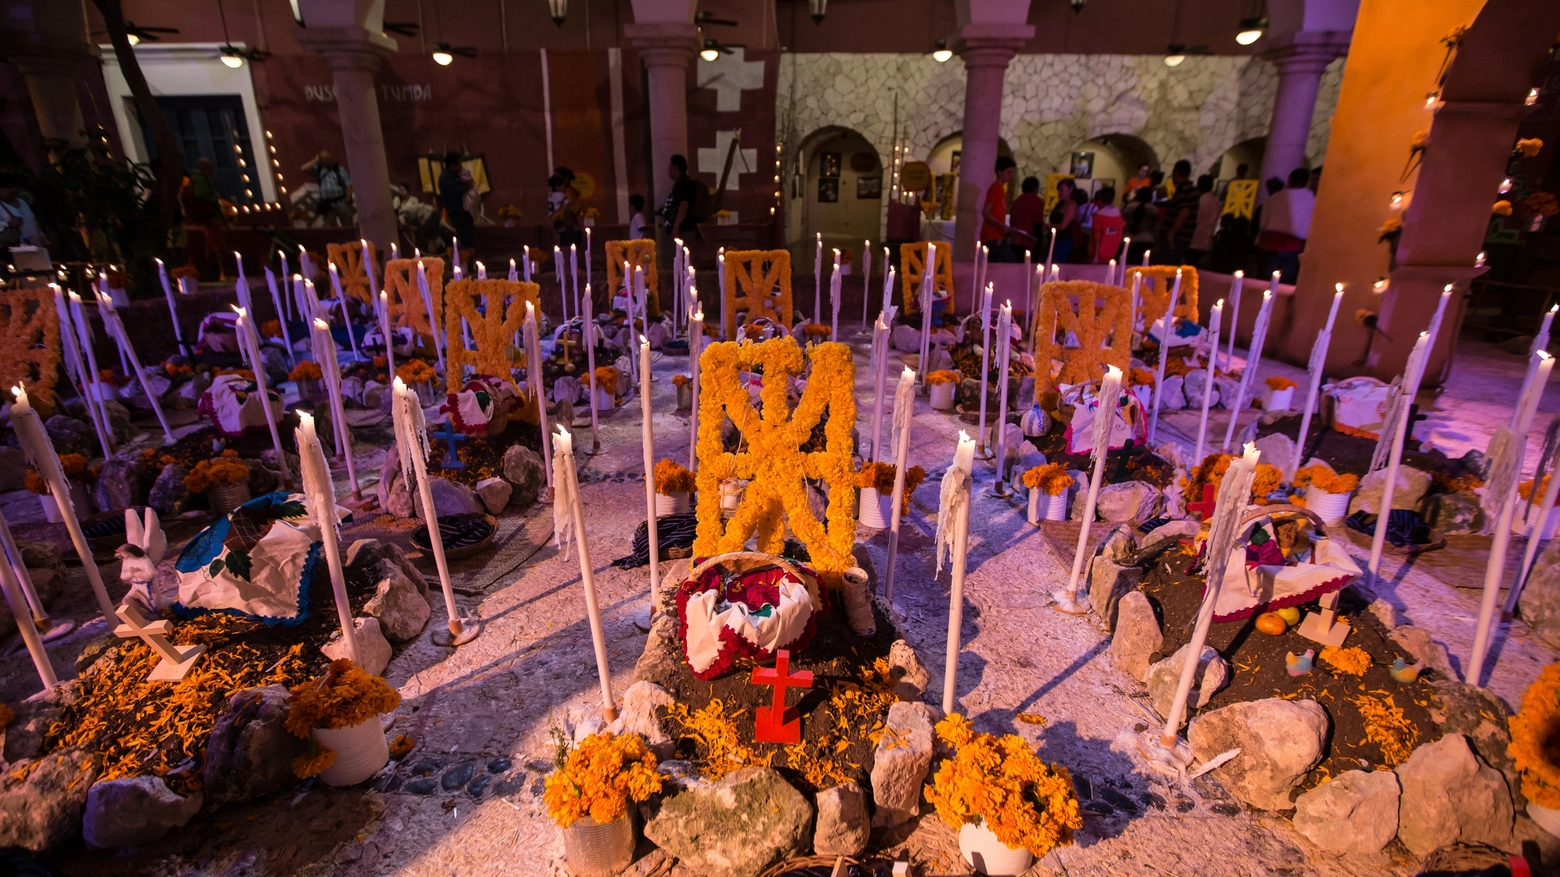 In Messico si festeggia il Dia de los muertos